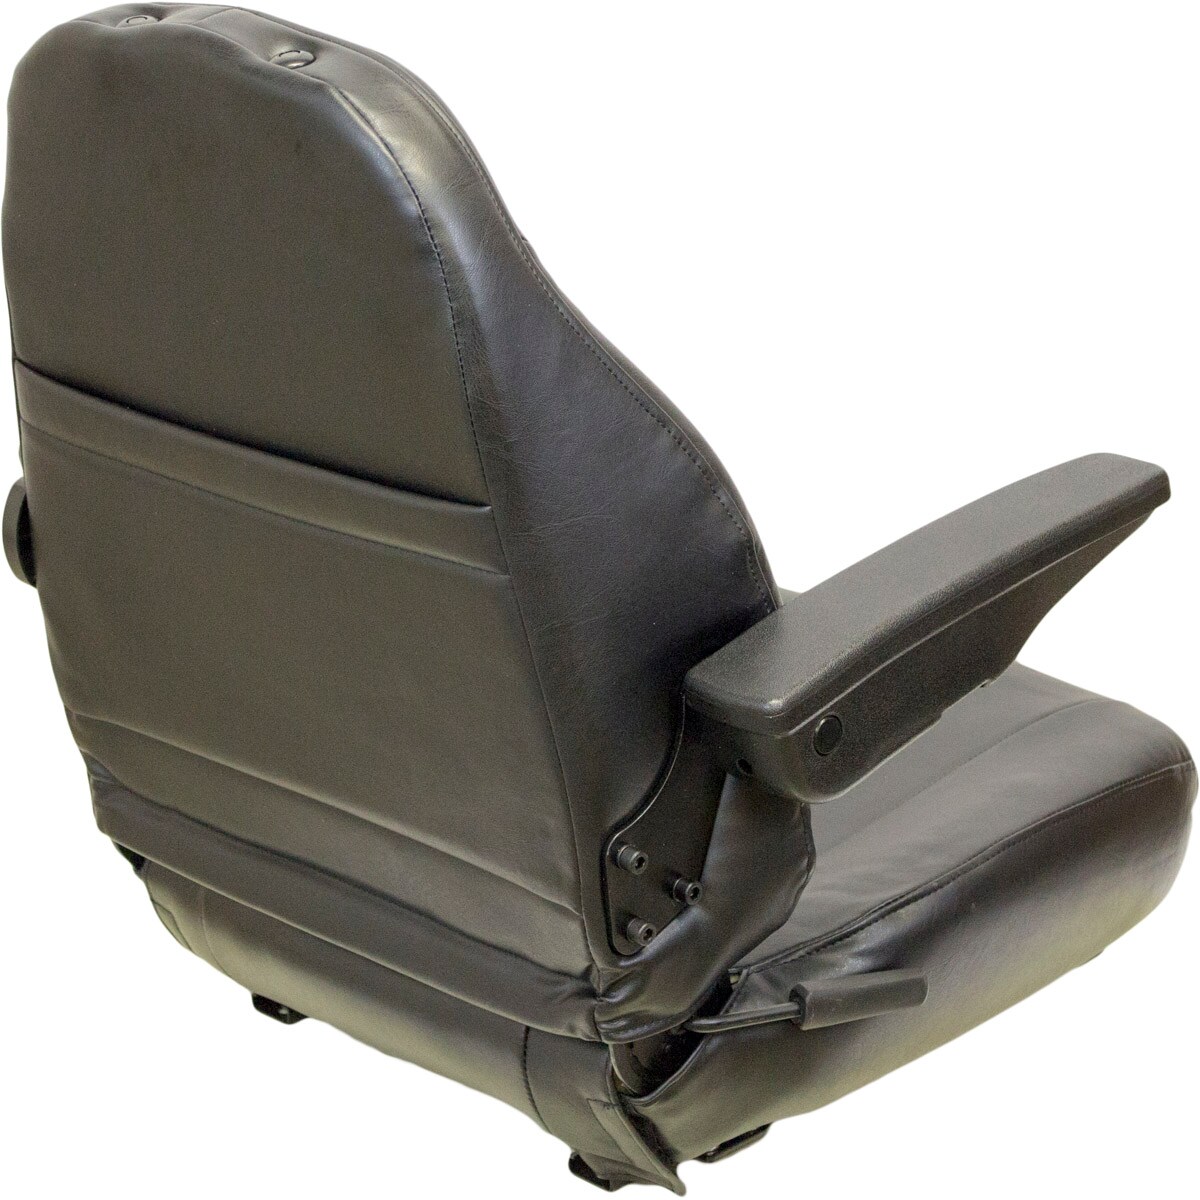 KM 450 Uni Pro Riding Lawn Mower Seat - Black Vinyl with Arms, Universal  Construct/Mower Seat, High-Density Foam Cushions